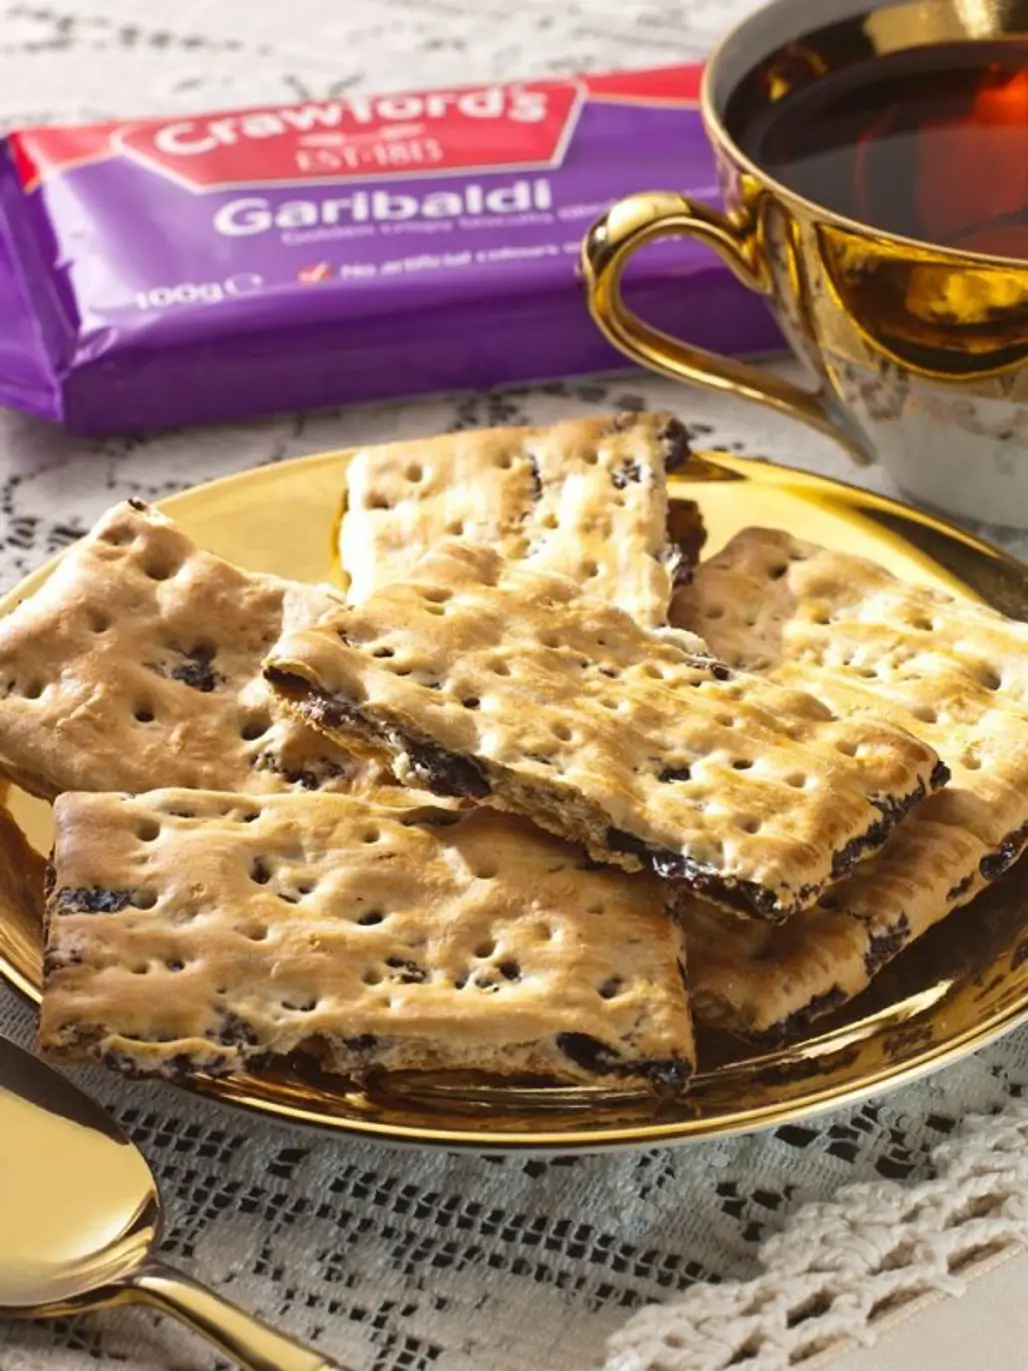 Garibaldi Biscuits